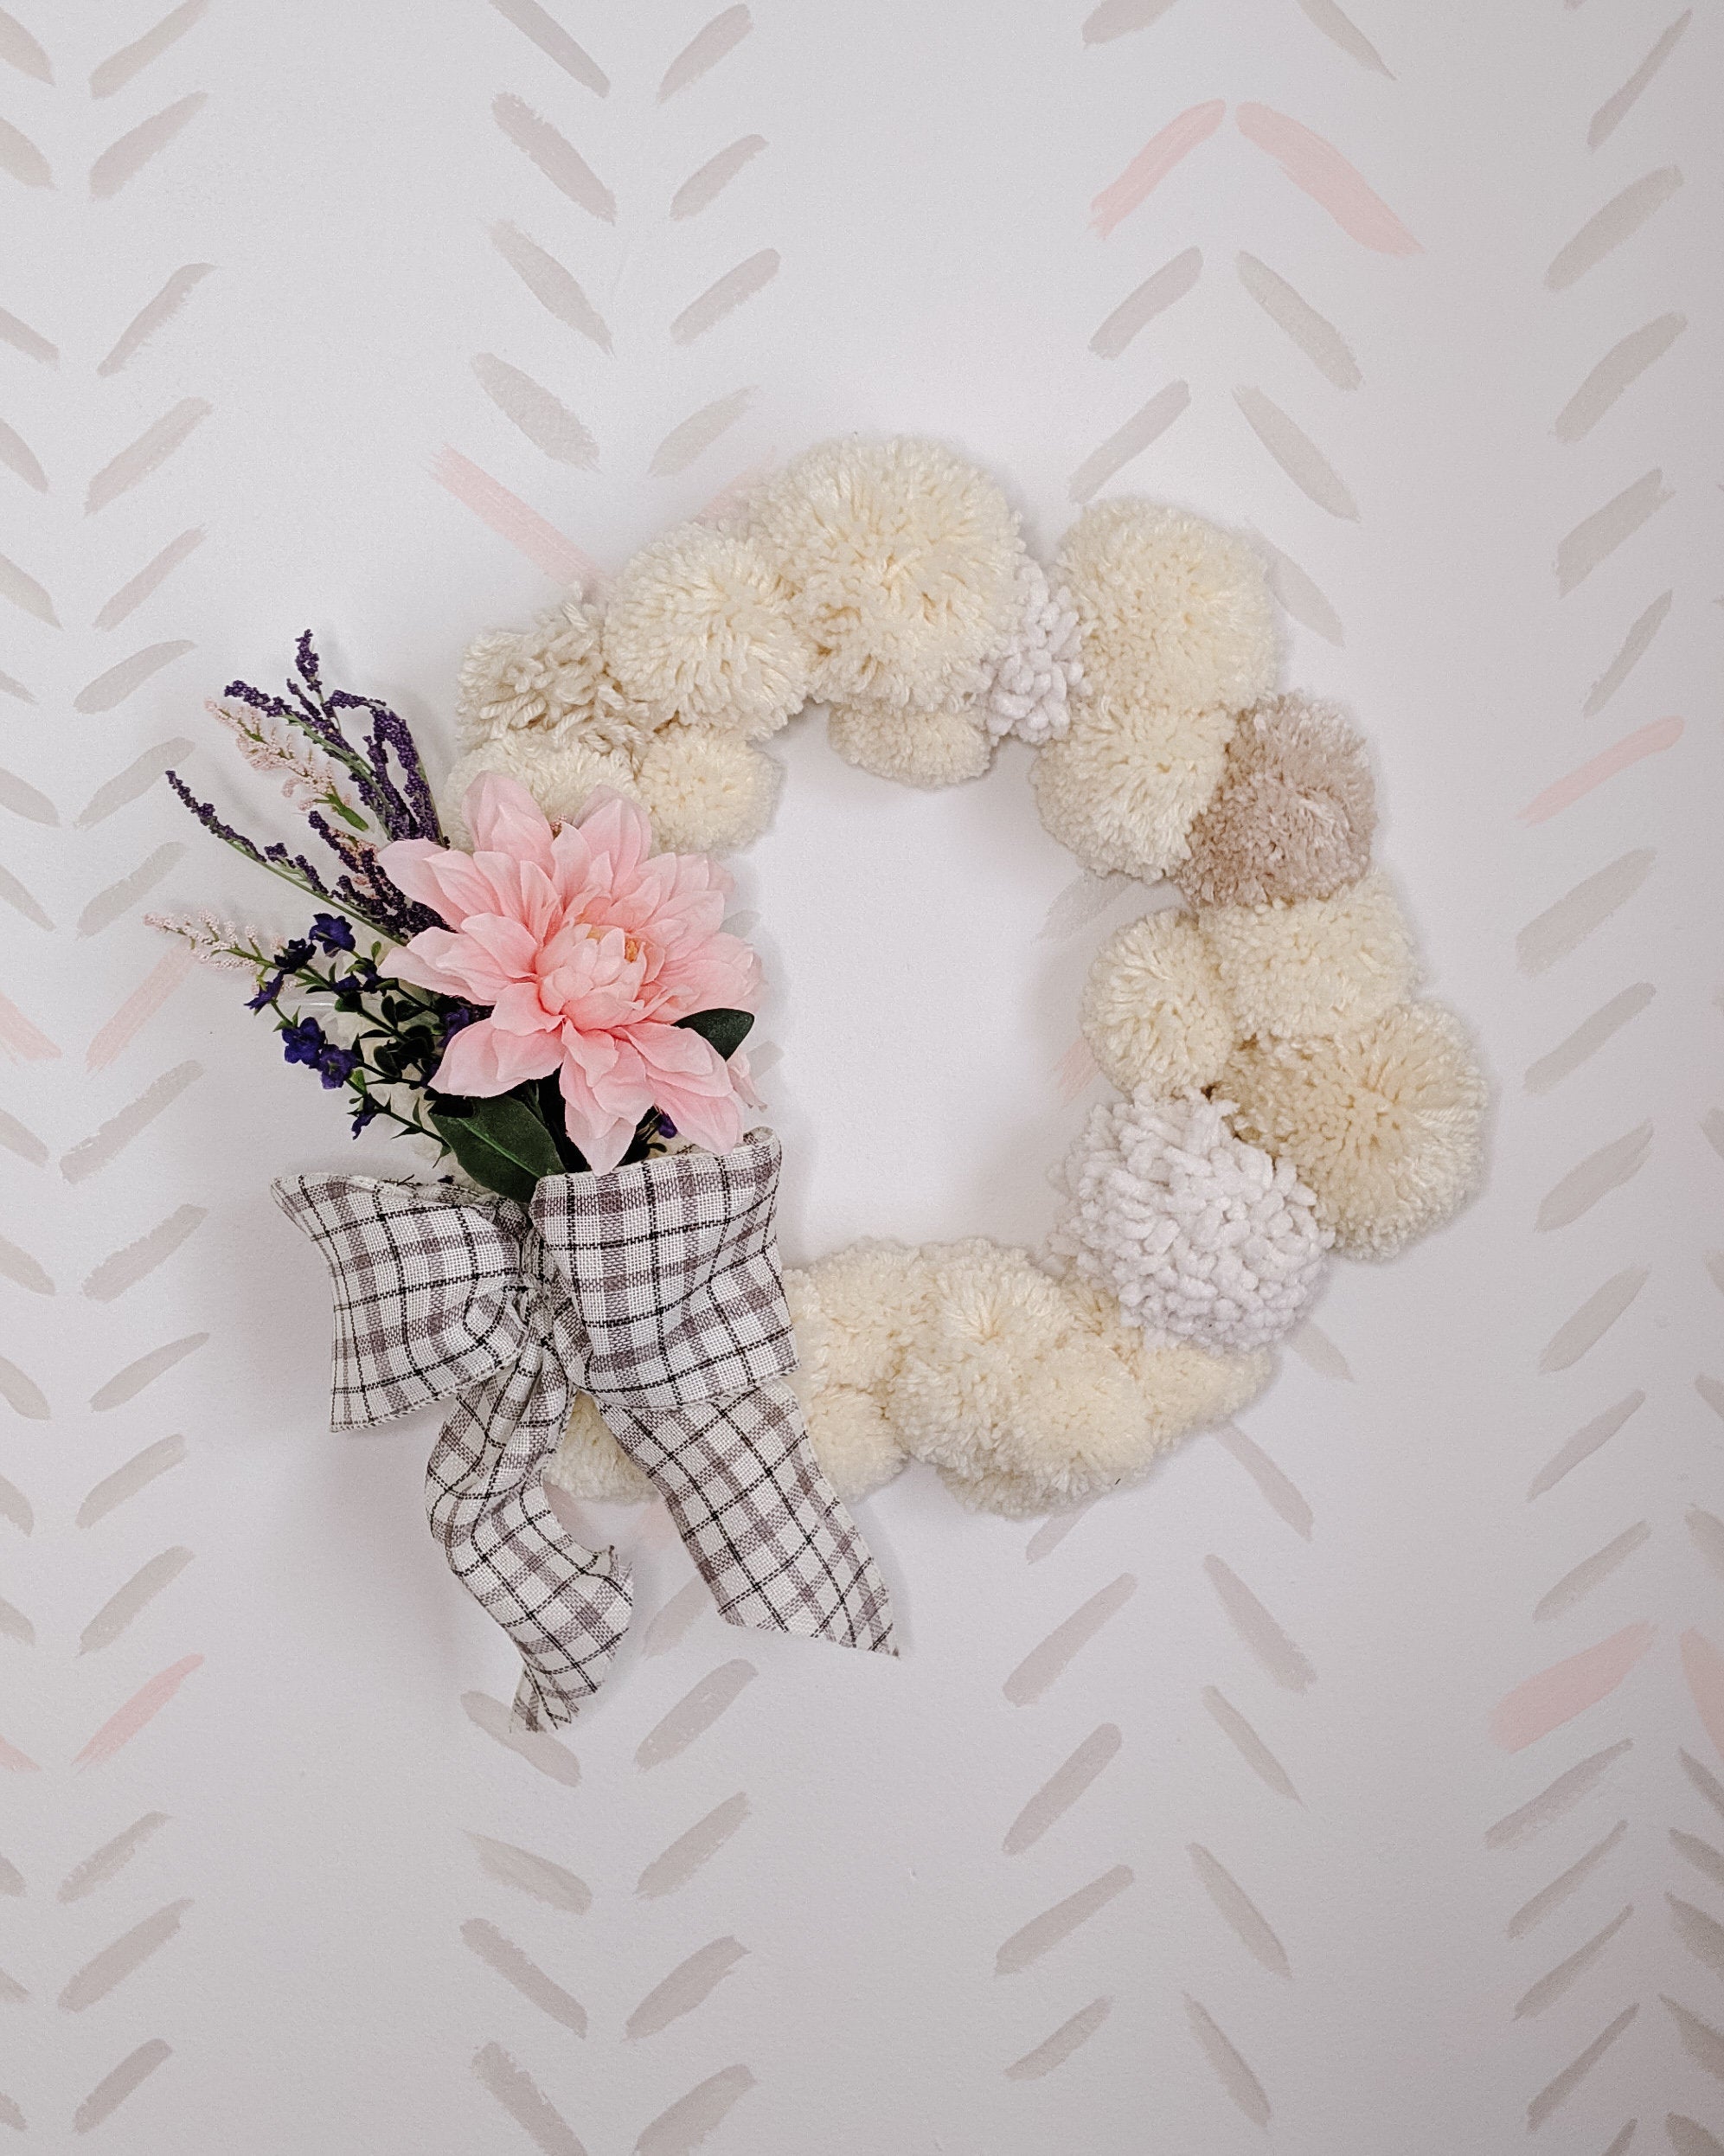 Wreath|Pompom Wreath | Neutral Pom Pom Wreath | Whimsical Wreath | Spring Wreath|Nursery Decor|Boho Wreath